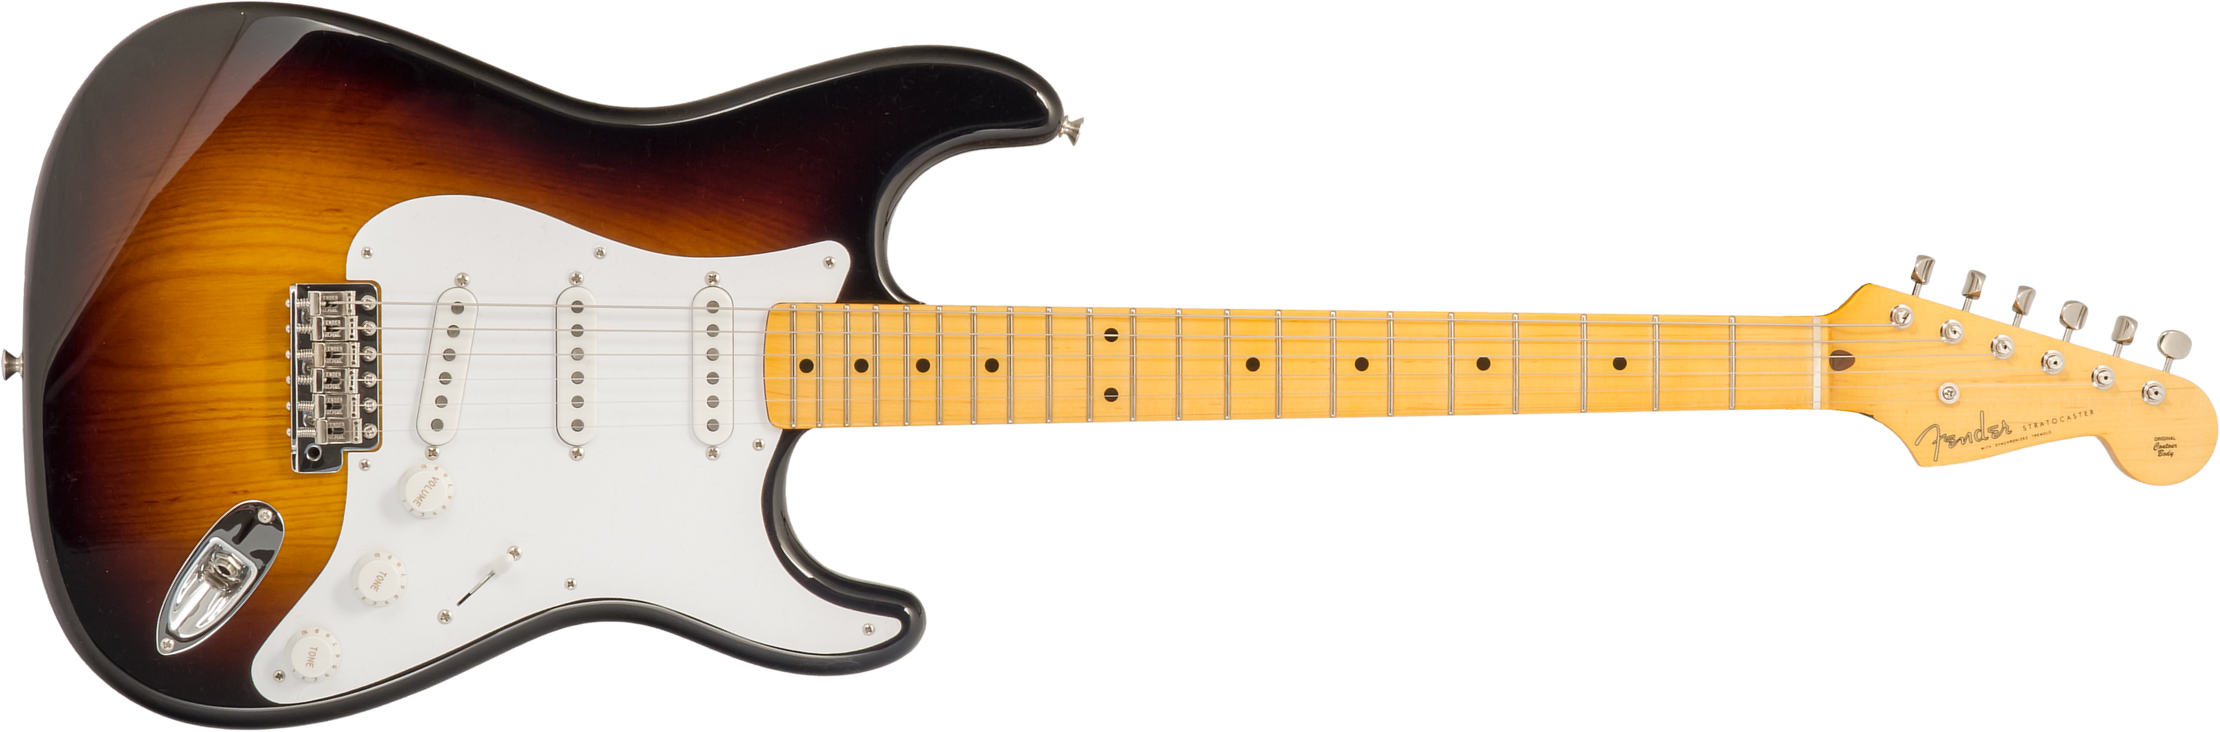 Fender Custom Shop Strat 1954 70th Anniv. 3s Trem Mn #xn4558 - Nos Wide Fade 2-color Sunburst - Elektrische gitaar in Str-vorm - Main picture